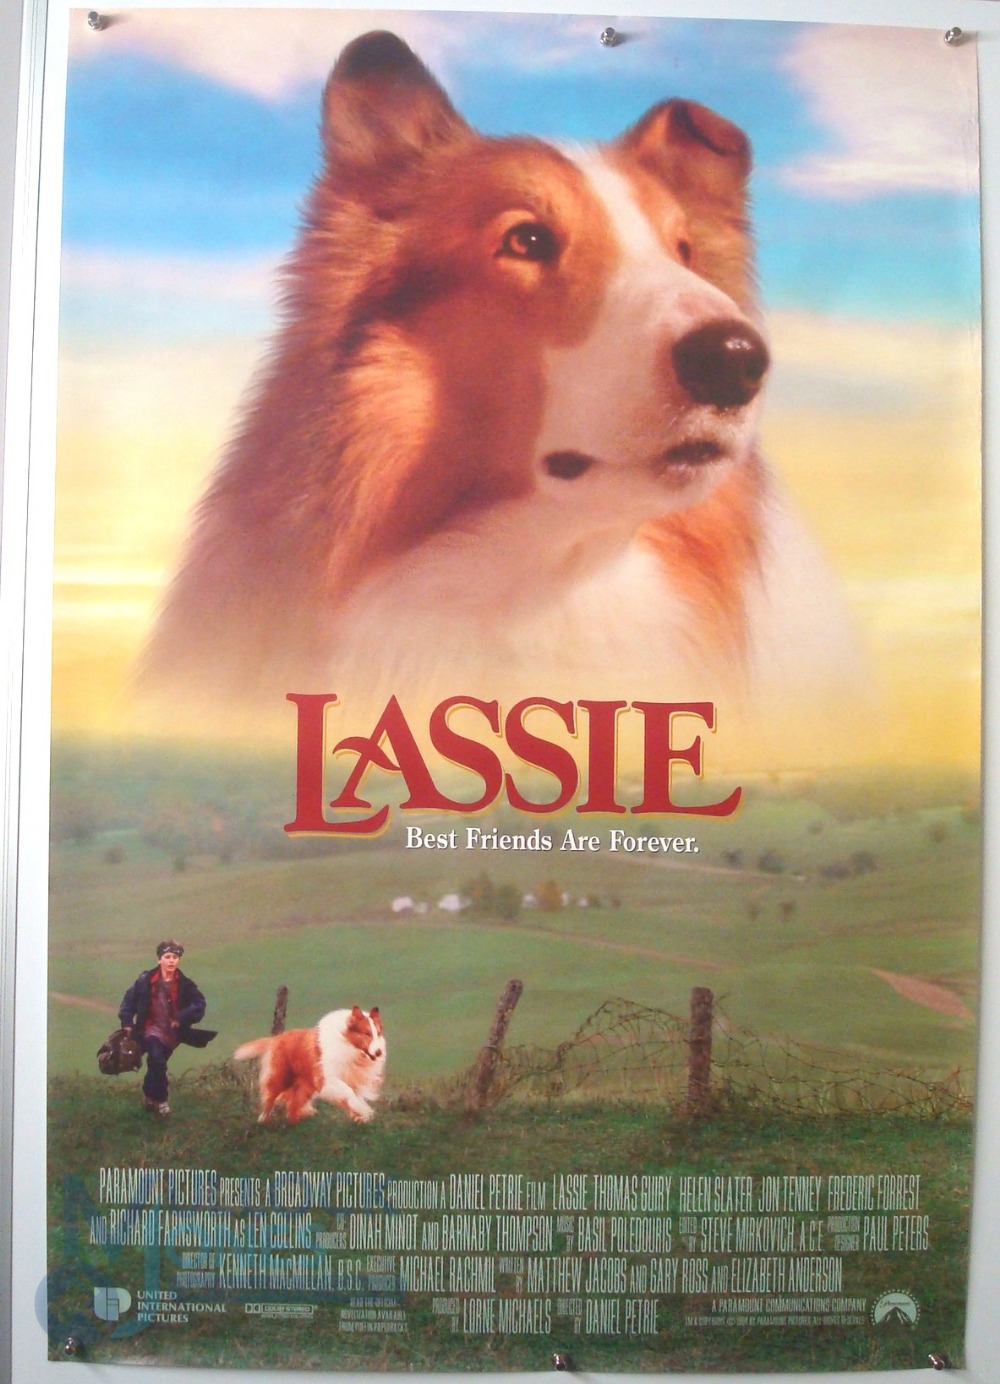 4 Original Movie/Film Posters - Rush, Under Siege 2, Lassie, Lethal Weapon 3 - 40x30" approx. kept - Bild 3 aus 4